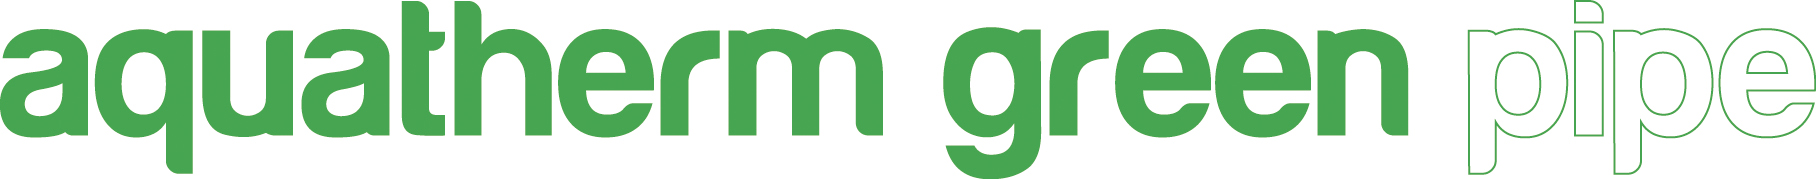 логотип aquatherm green pipe